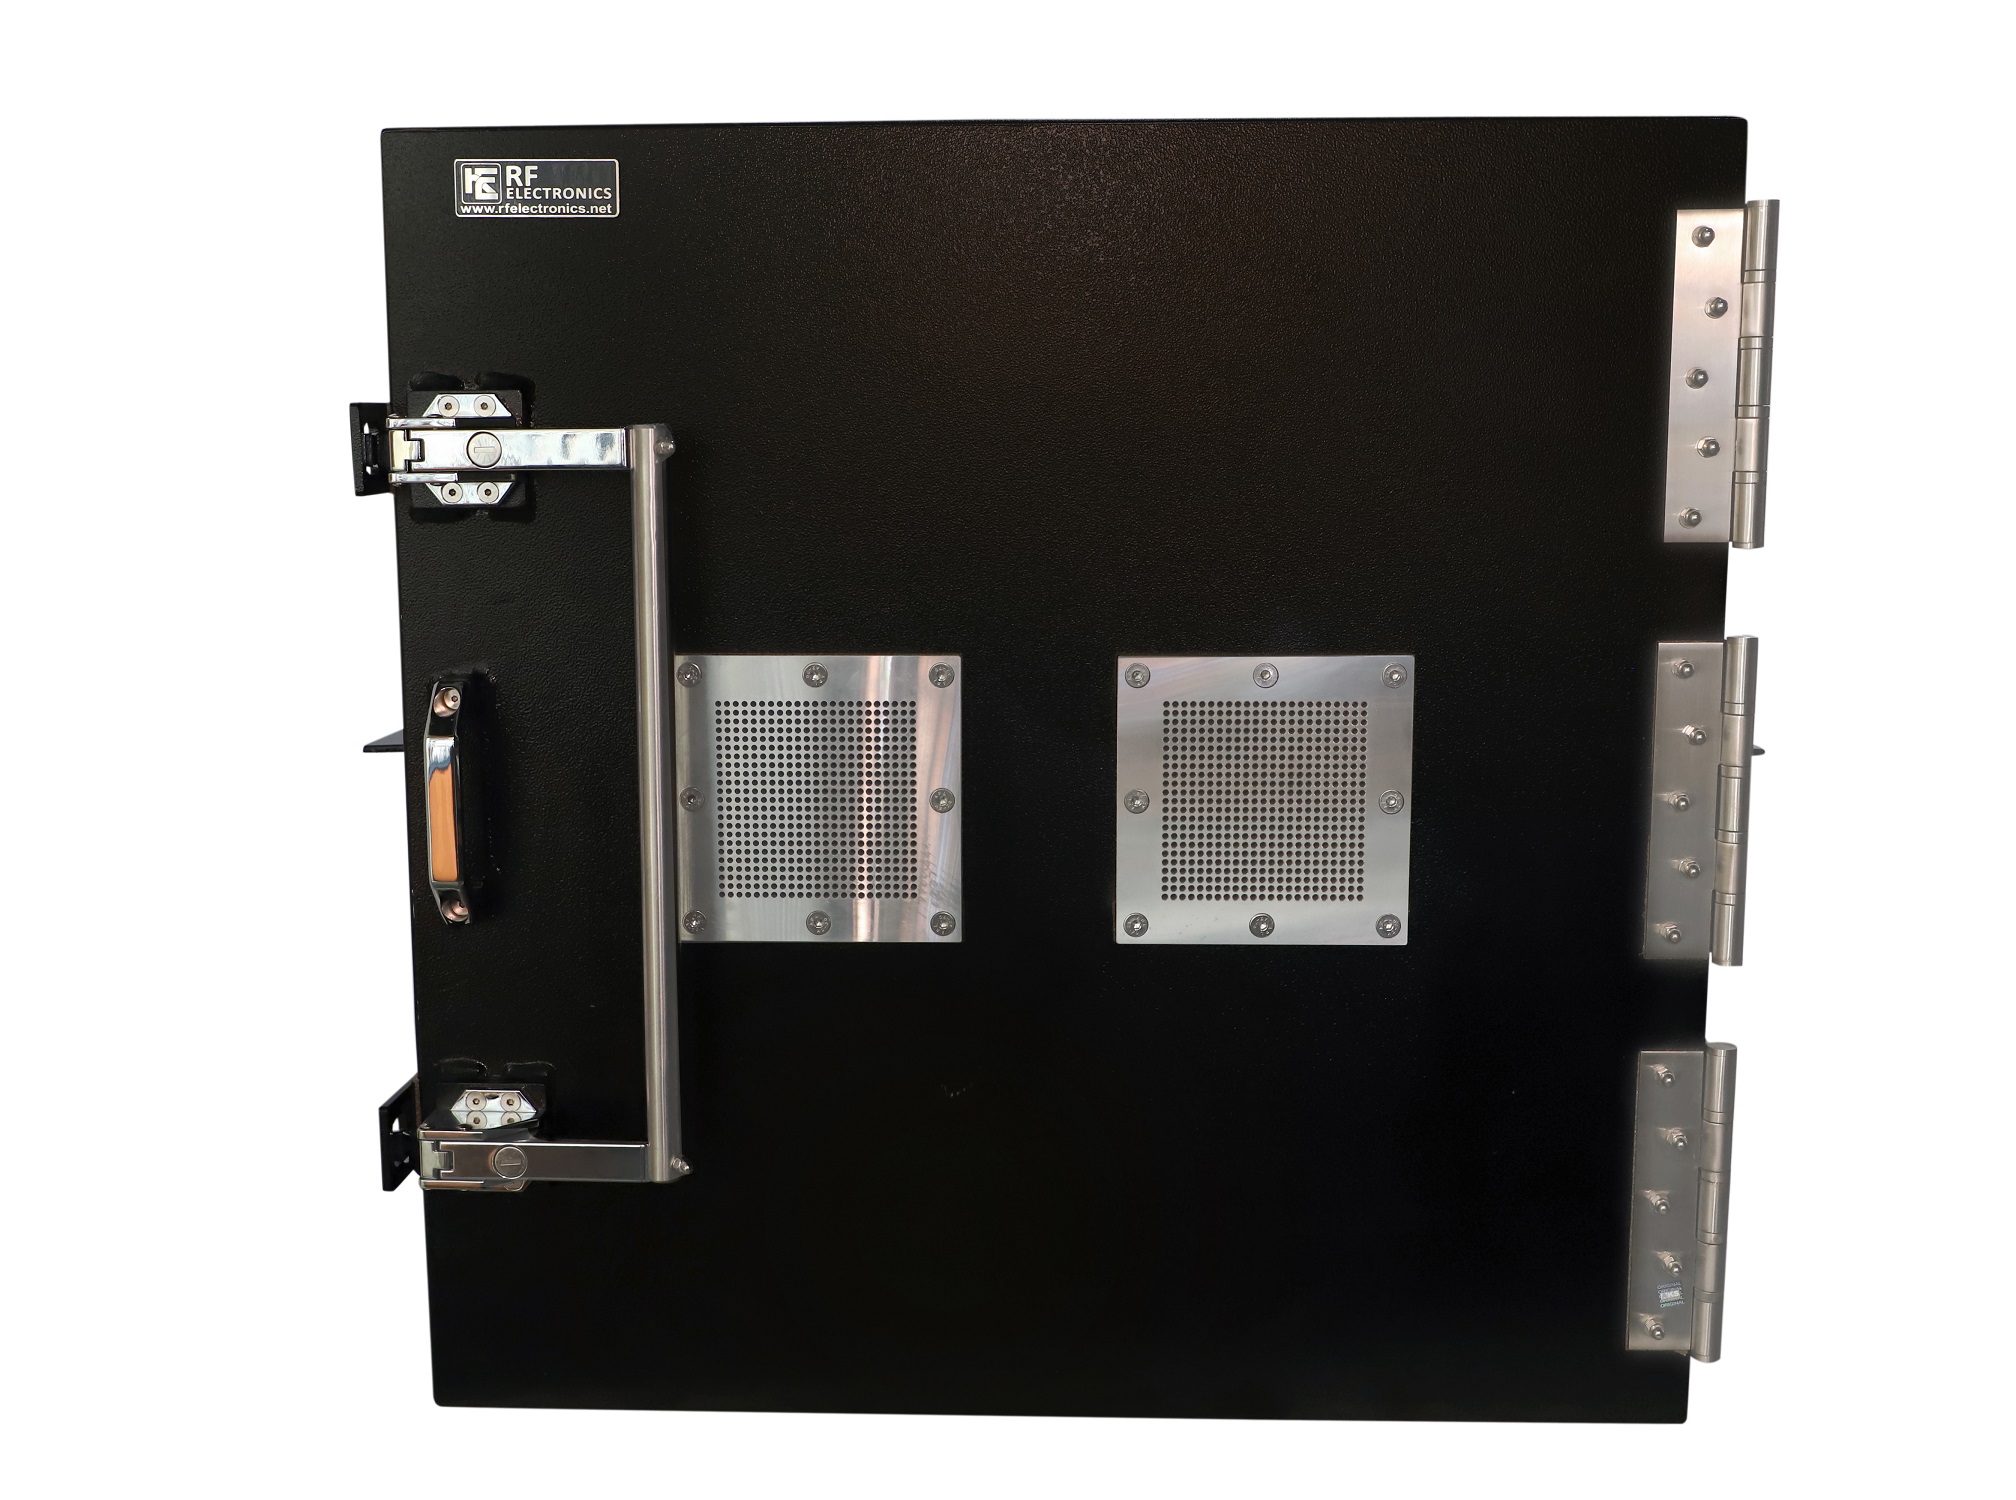 HDRF-2570-N RF Shield Test Box